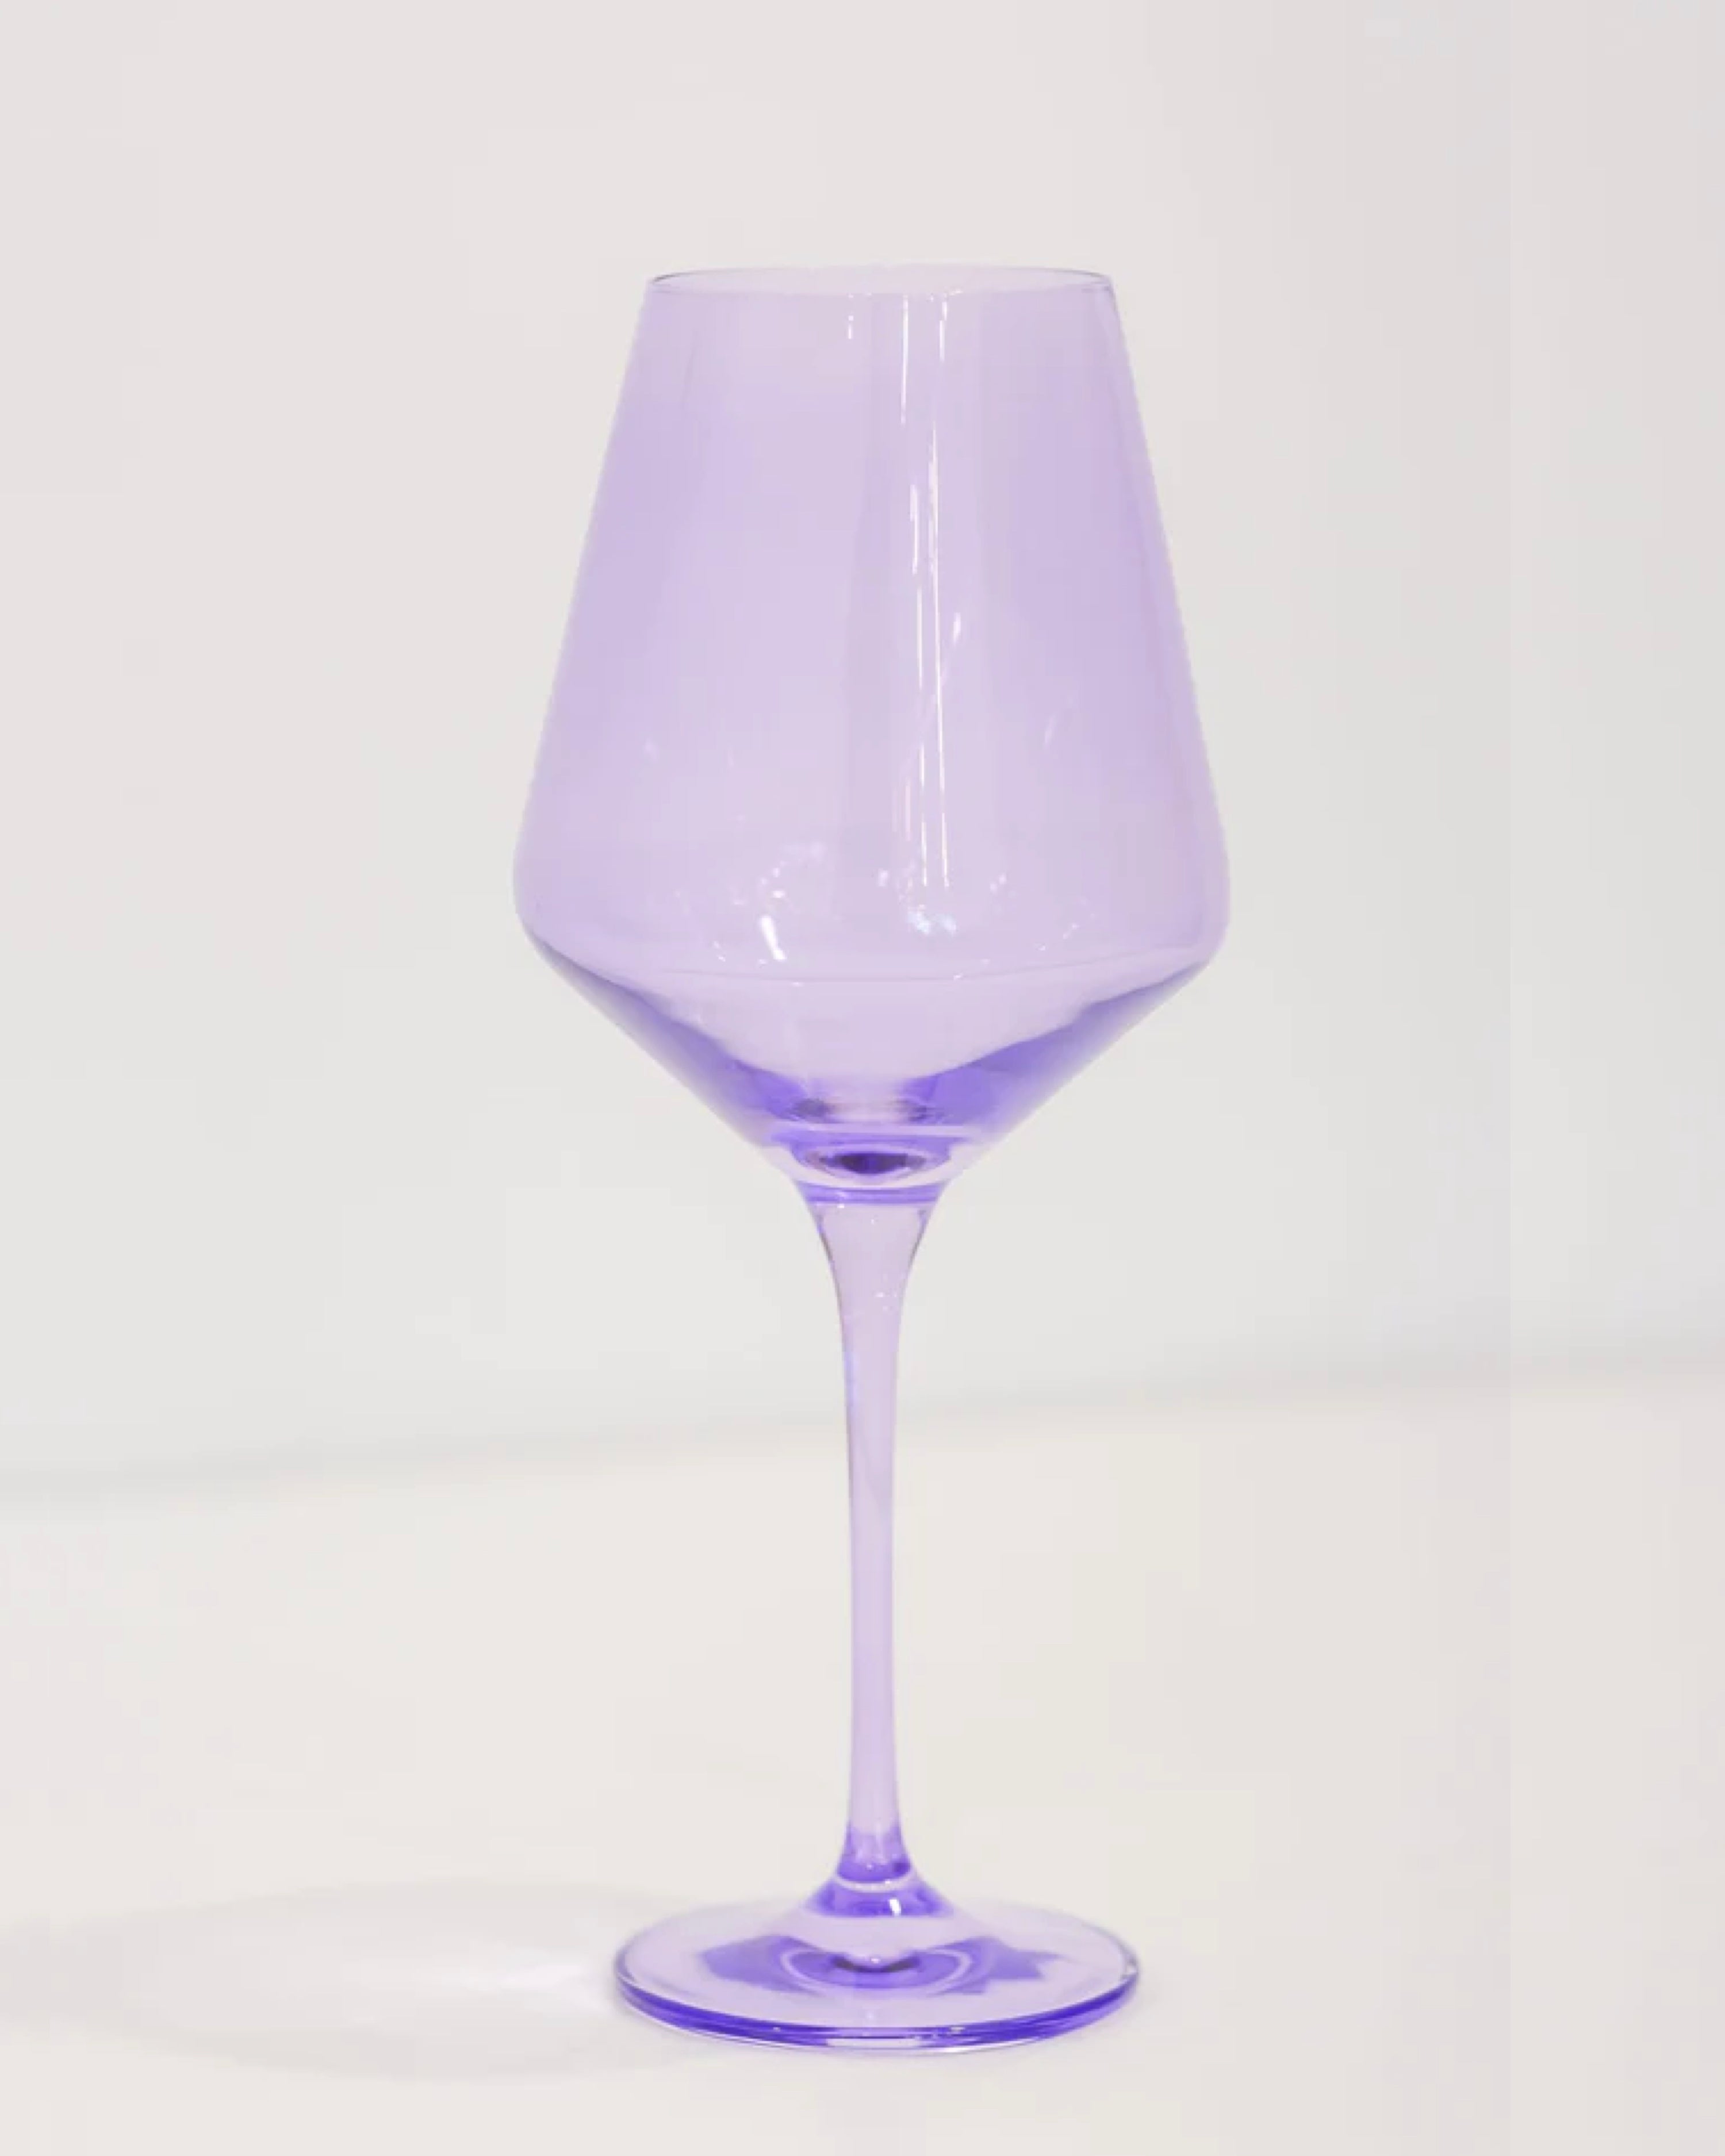 LAVENDER WINE GLASSES, SET OF 6